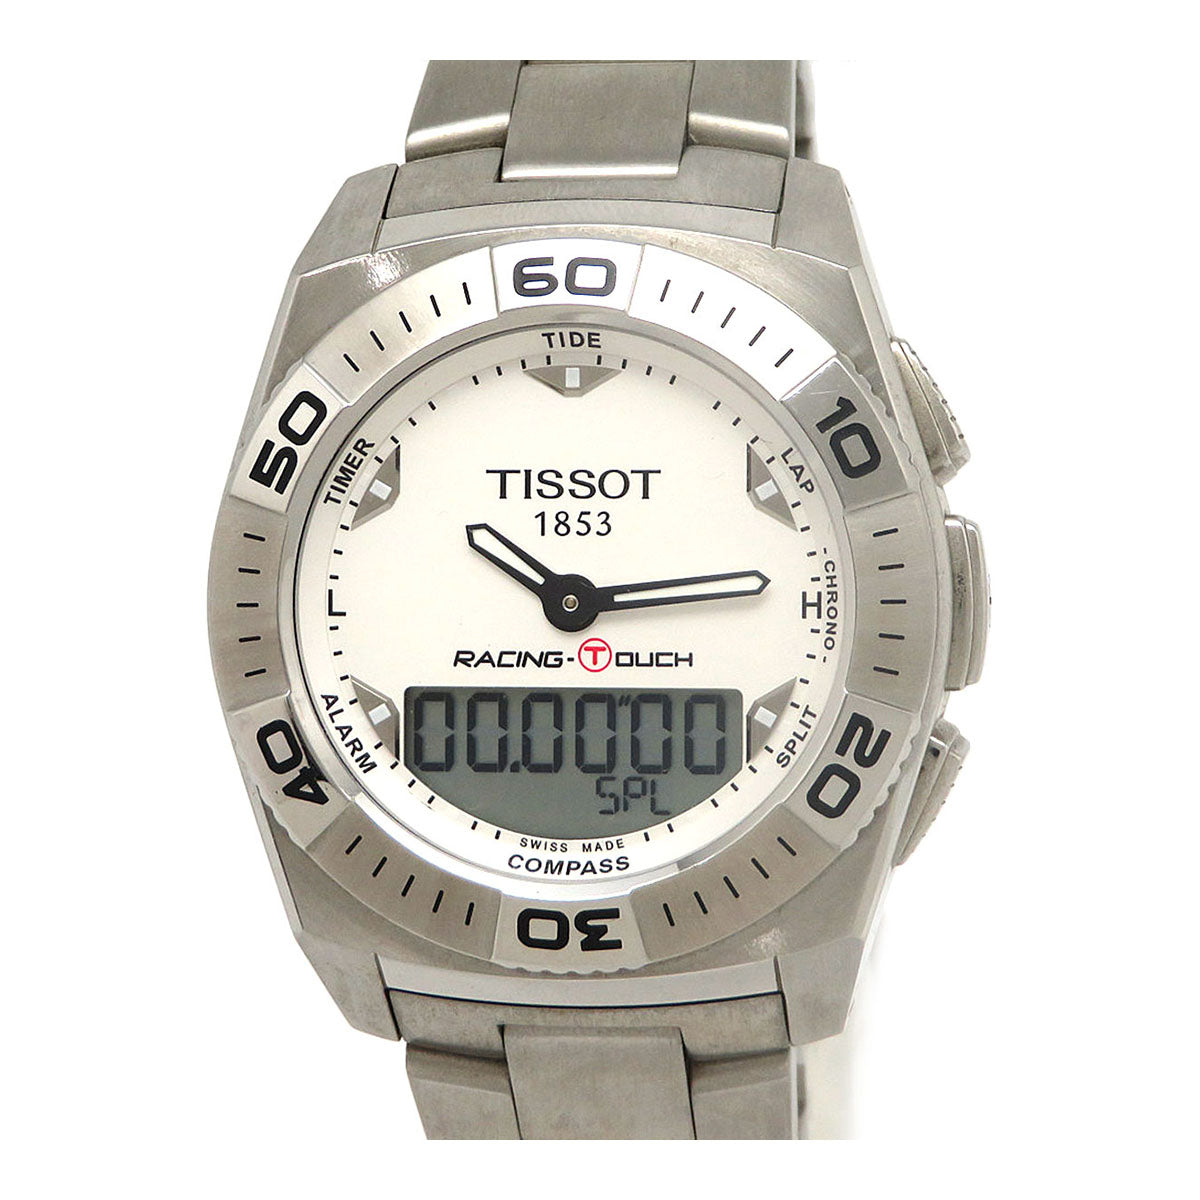 Quartz Racing Touch Wrist Watch T002.520.11.031.00